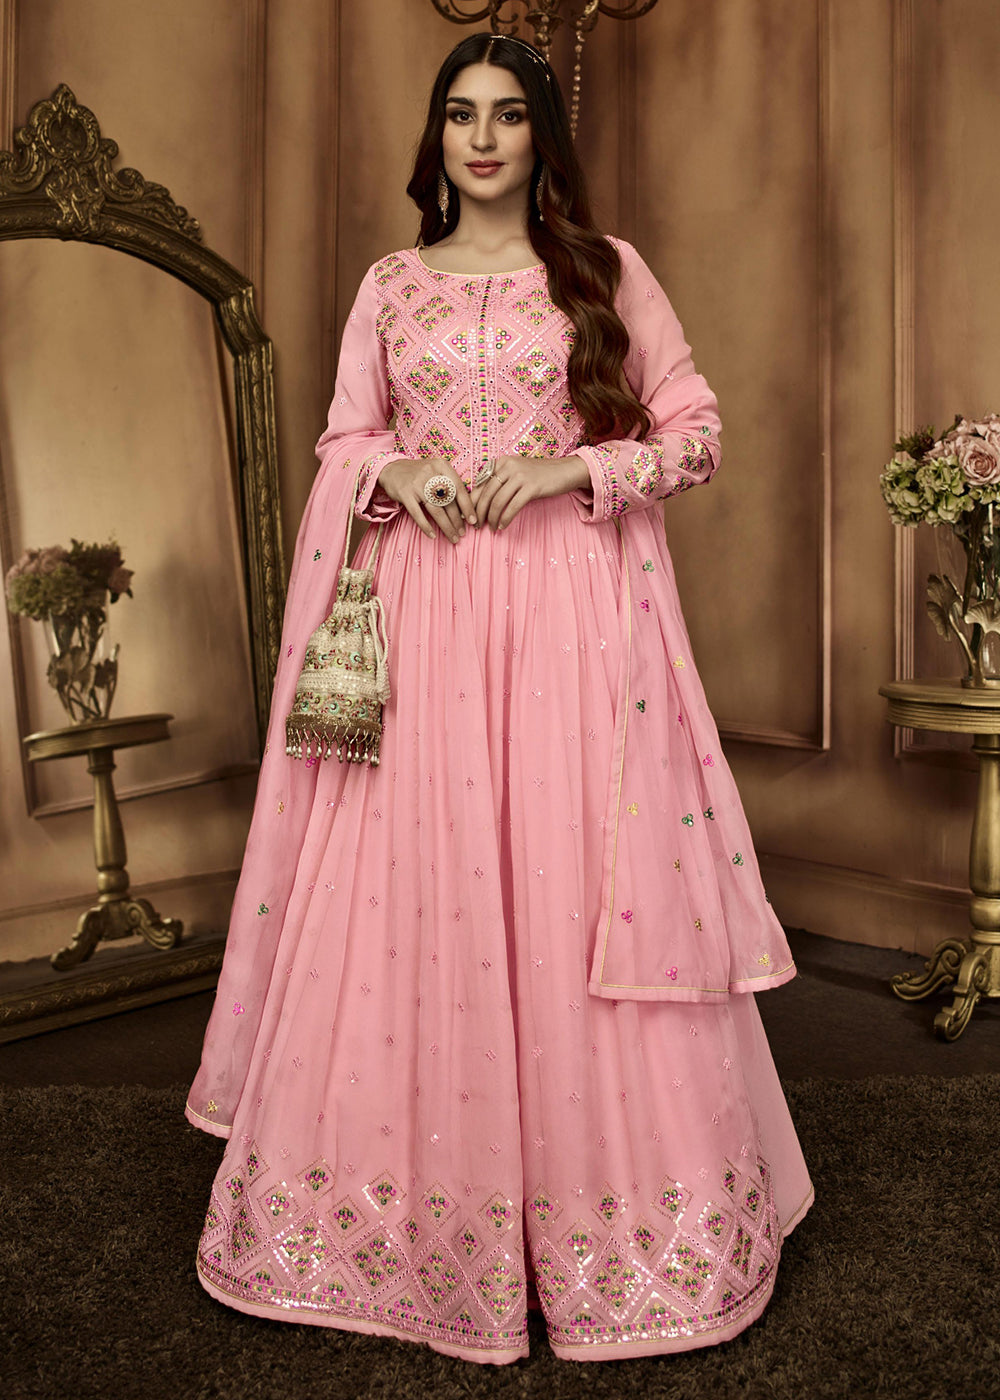 Buy Now Riveting Light Pink Sequins Wedding Festive Anarkali Suit Online in USA, UK, Australia, New Zealand, Canada & Worldwide at Empress Clothing. 